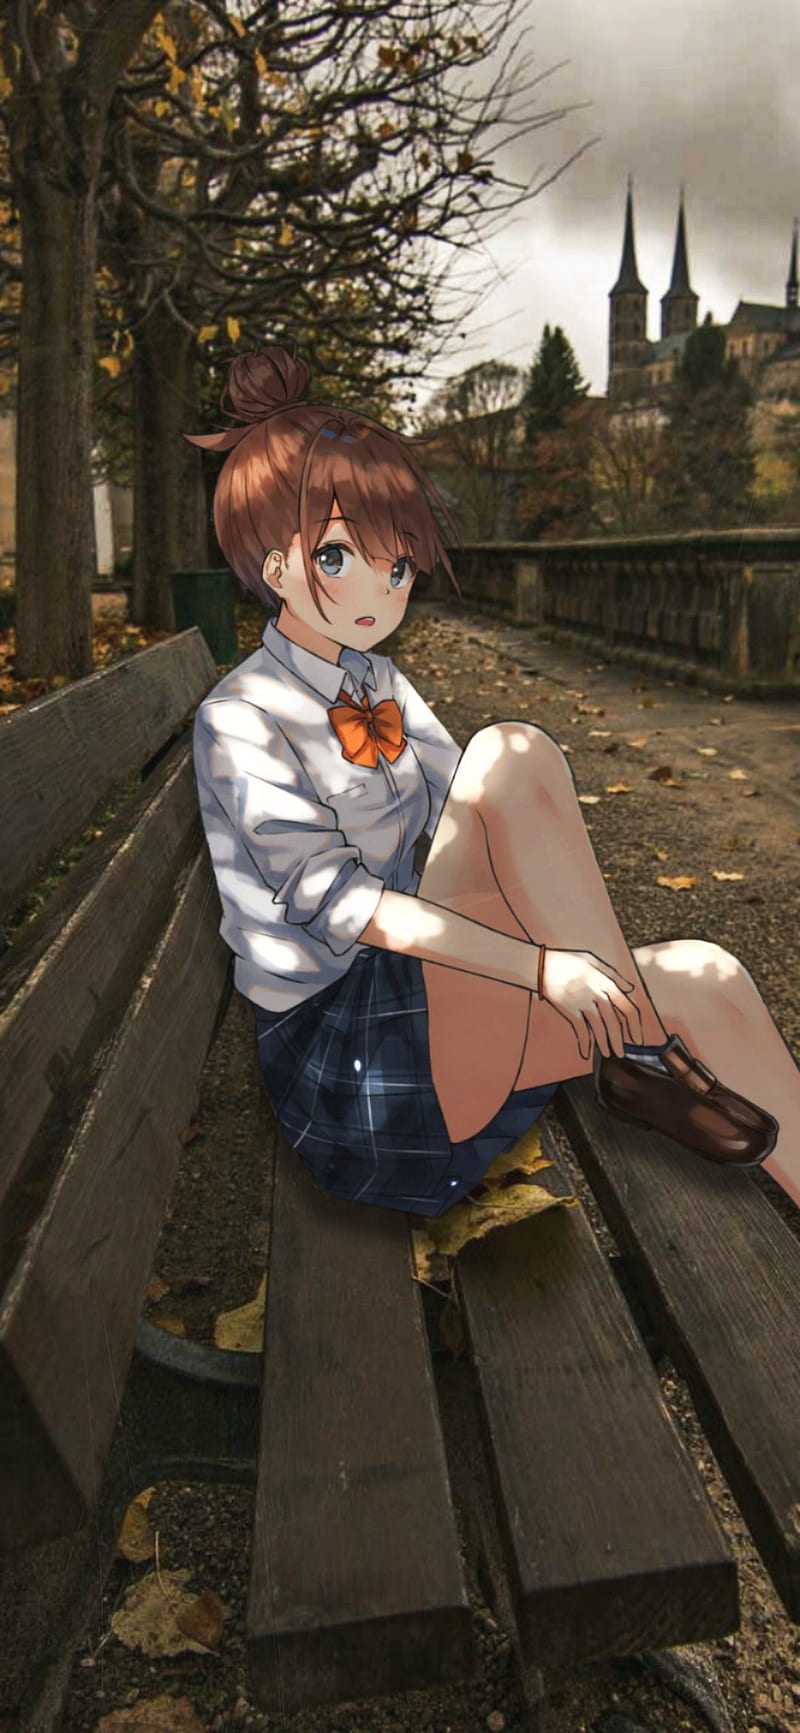 I love Anime - The bench that mystifies. Anime:Oresuki - Yuu | Facebook